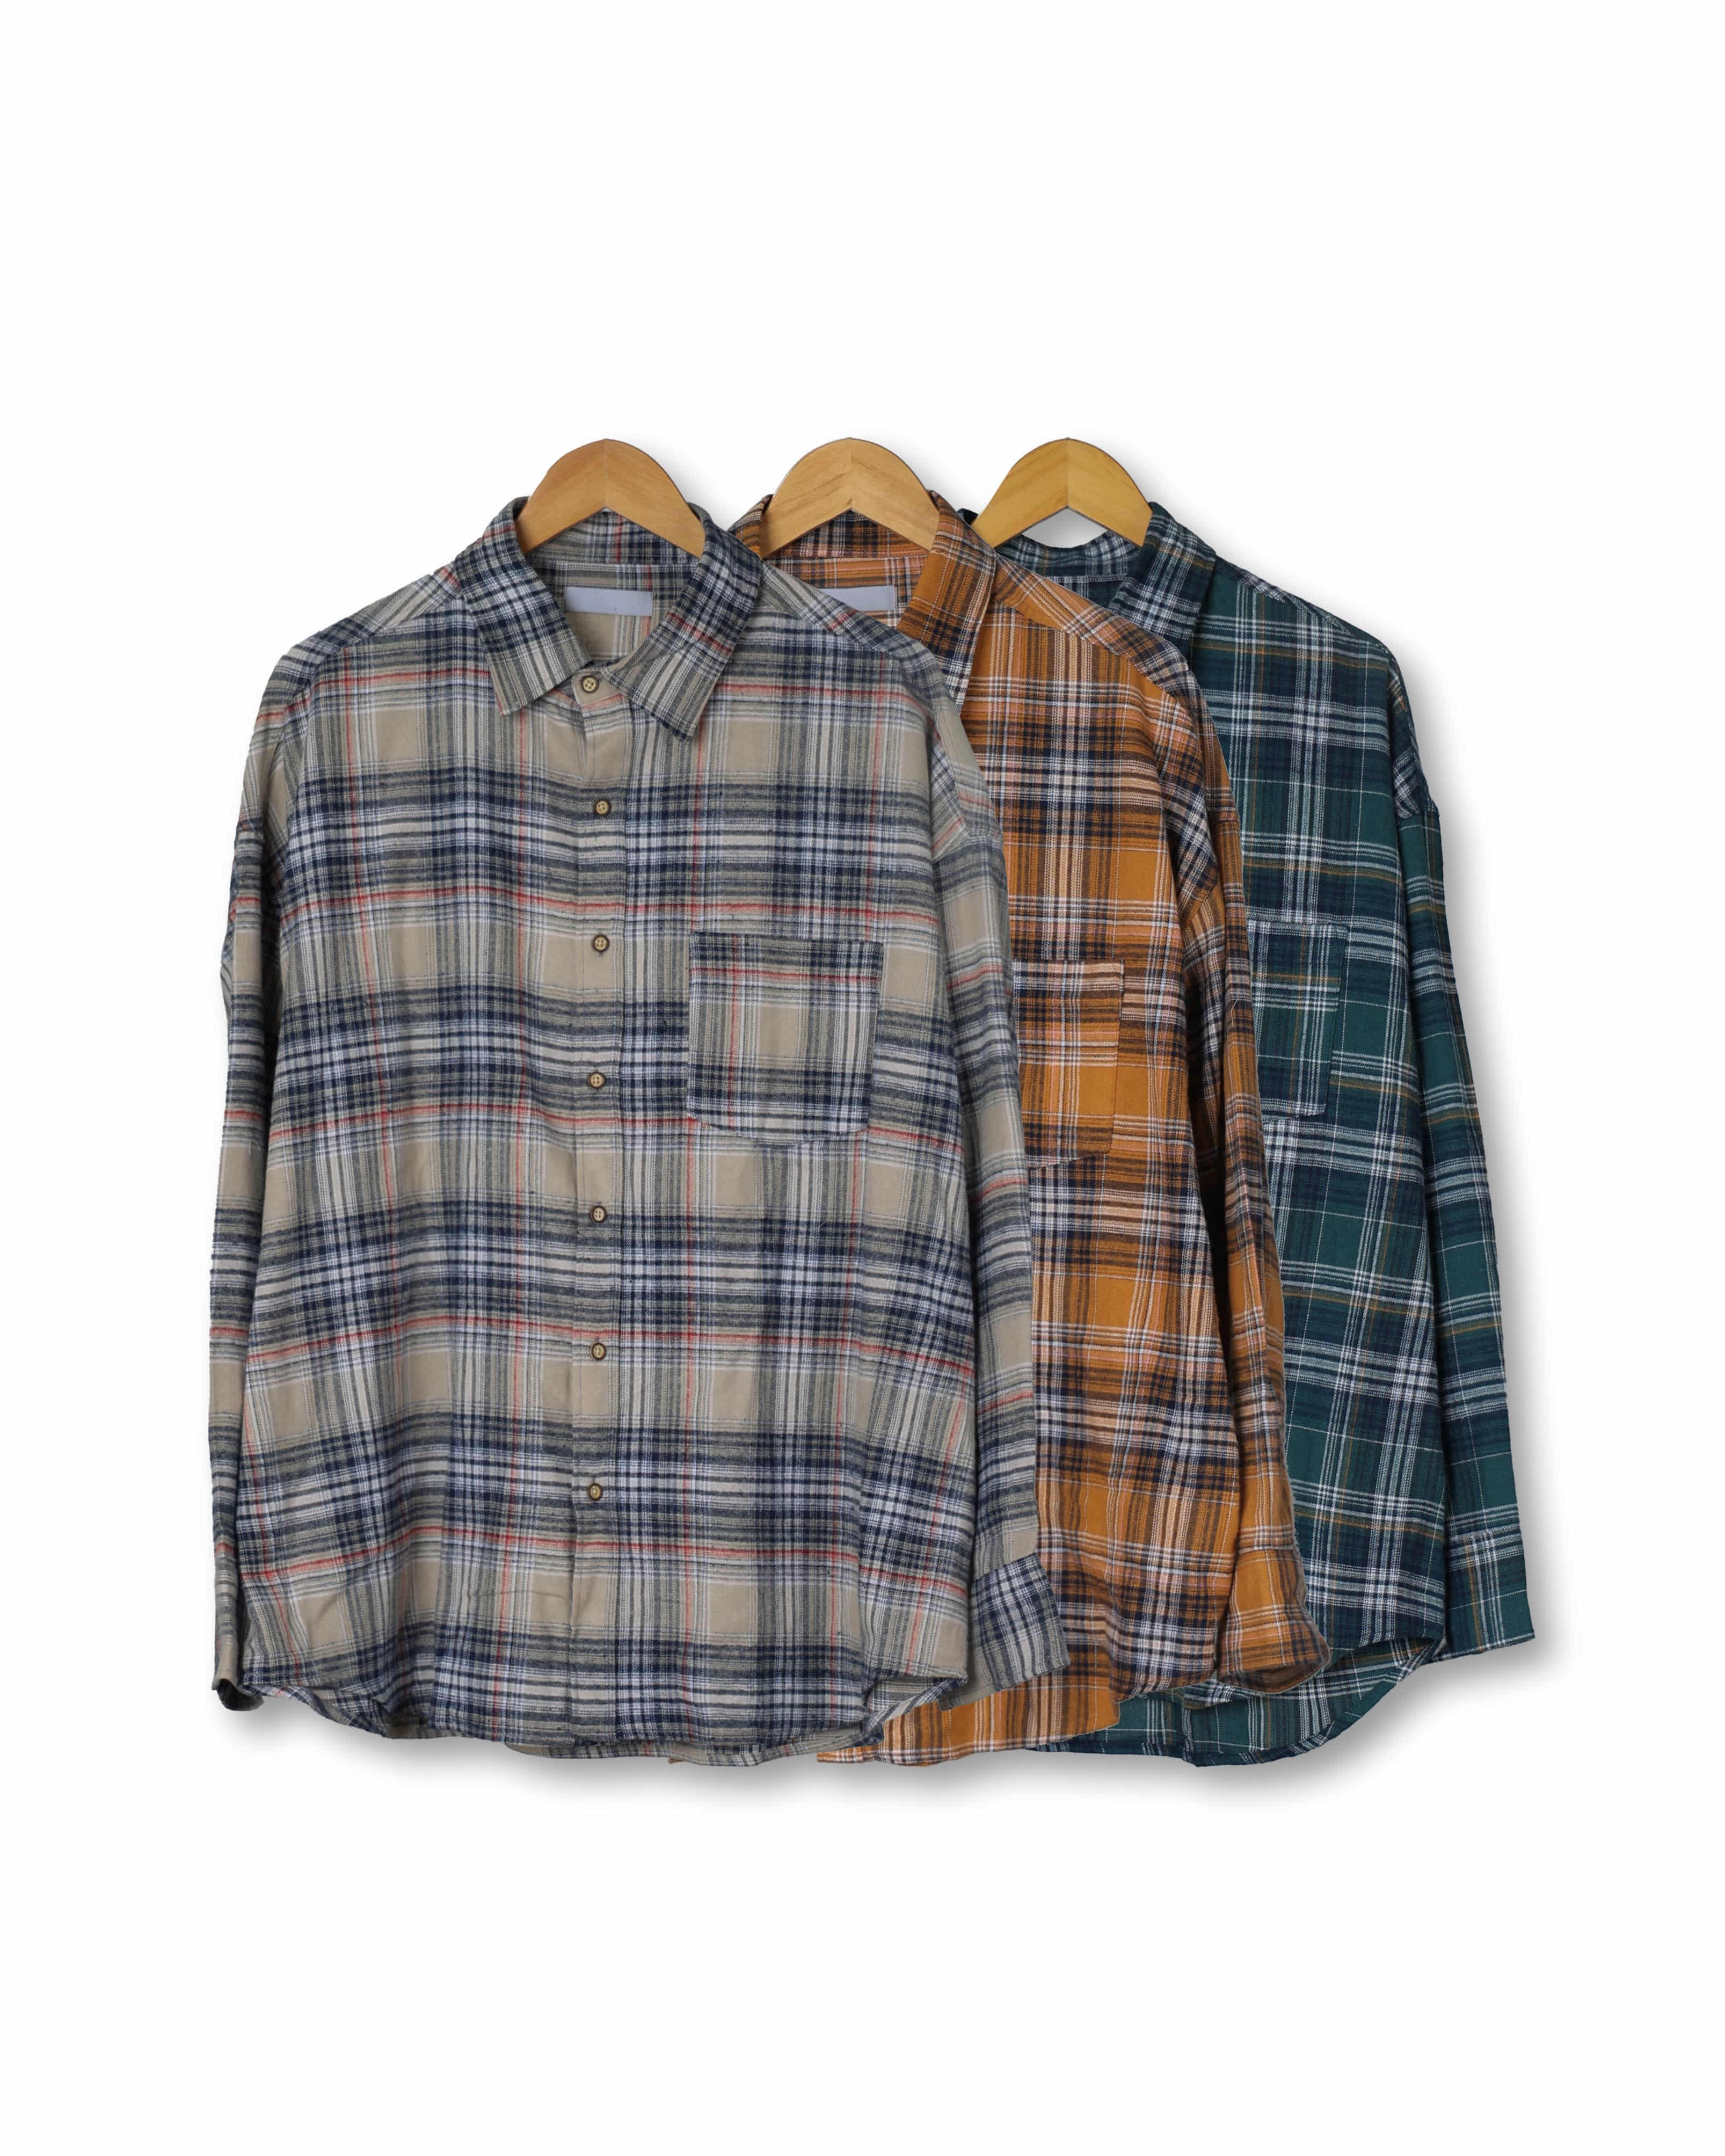 CONS TiGi Over Check Shirts (Green/Mustard/Beige) - 5차 리오더 (4/19 배송예정)